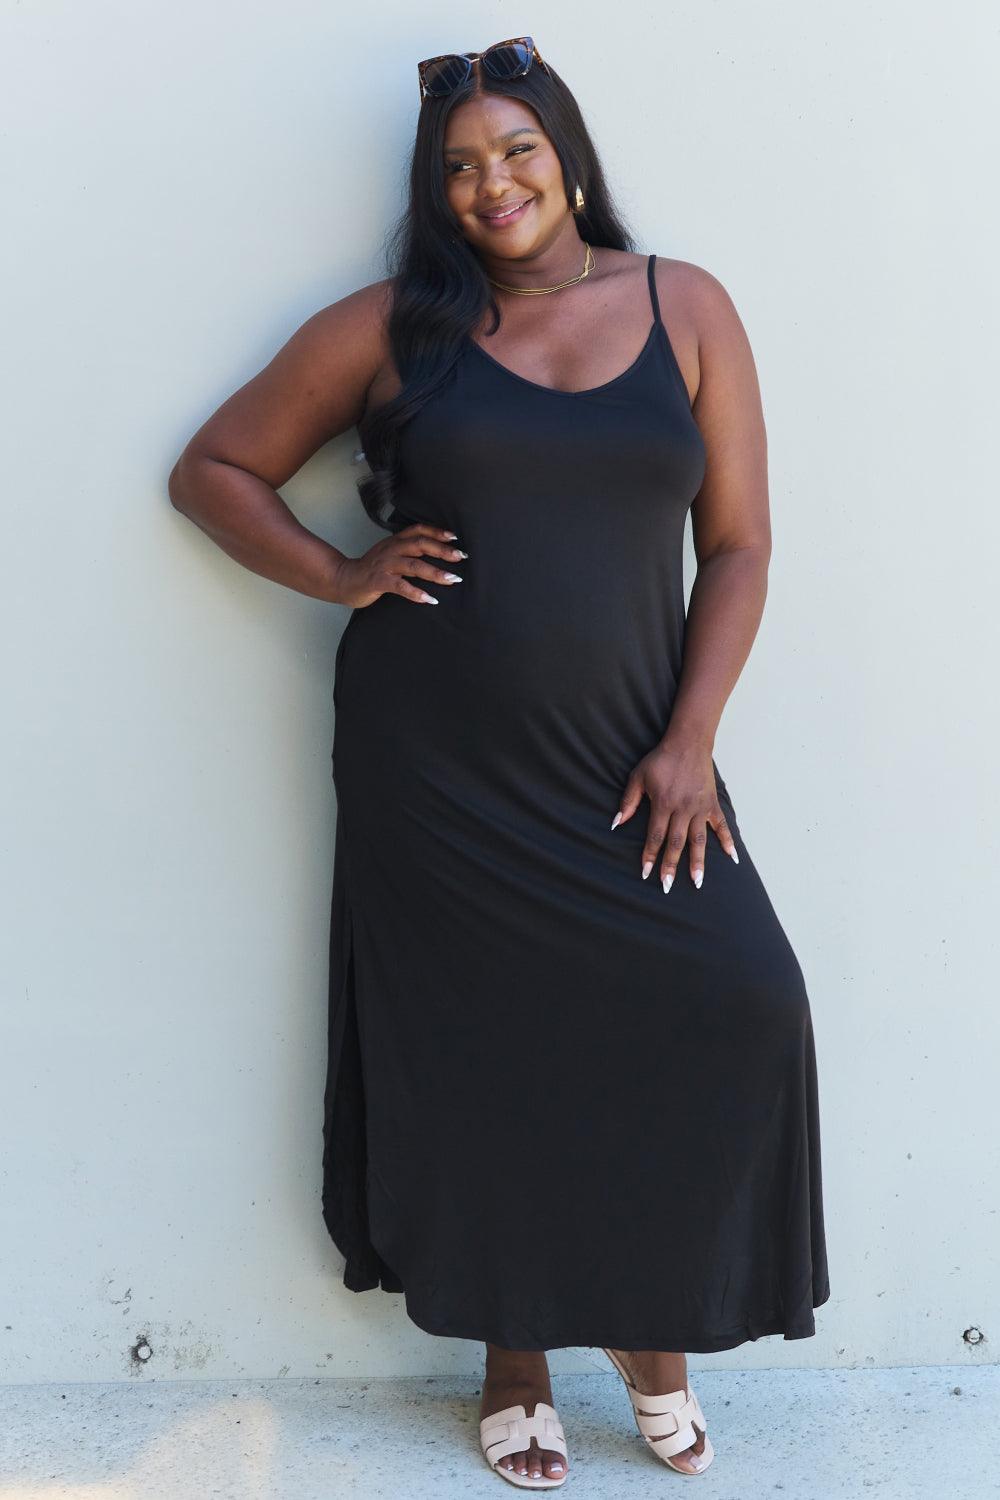 Bona Fide Fashion - Full Size Cami Side Slit Maxi Dress in Black - Women Fashion - Bona Fide Fashion